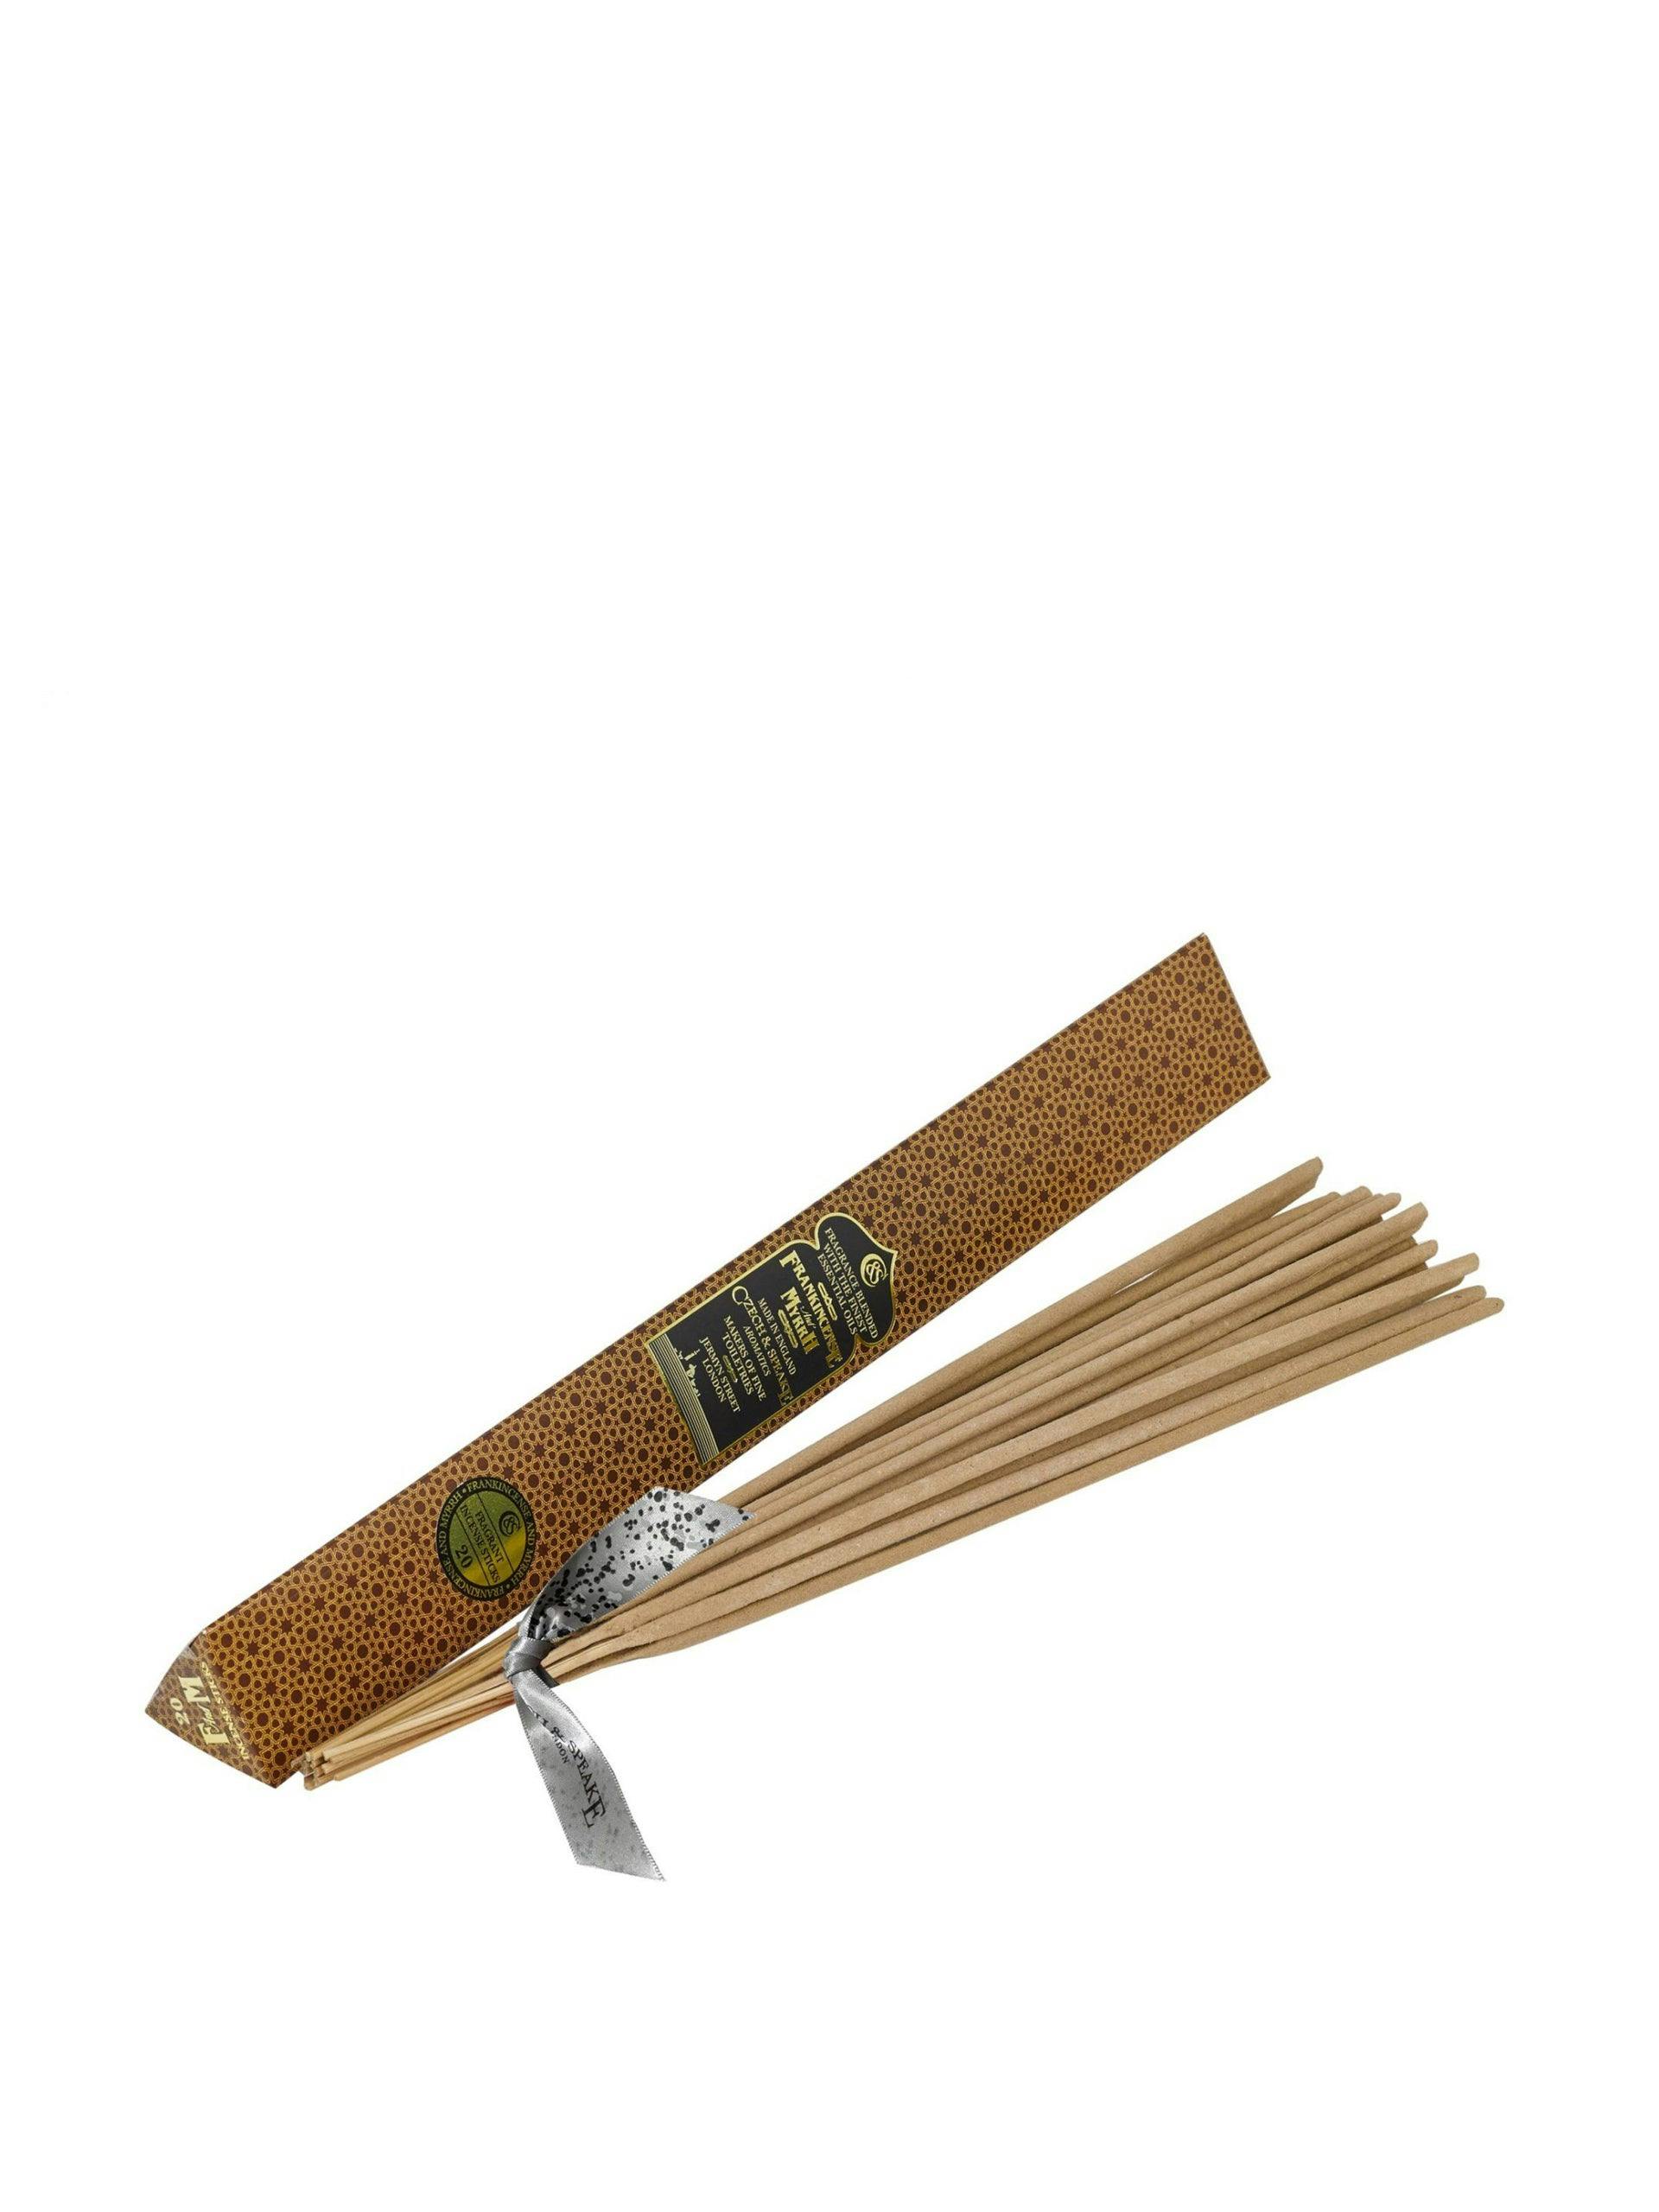 Frankincense & Myrrh incense sticks